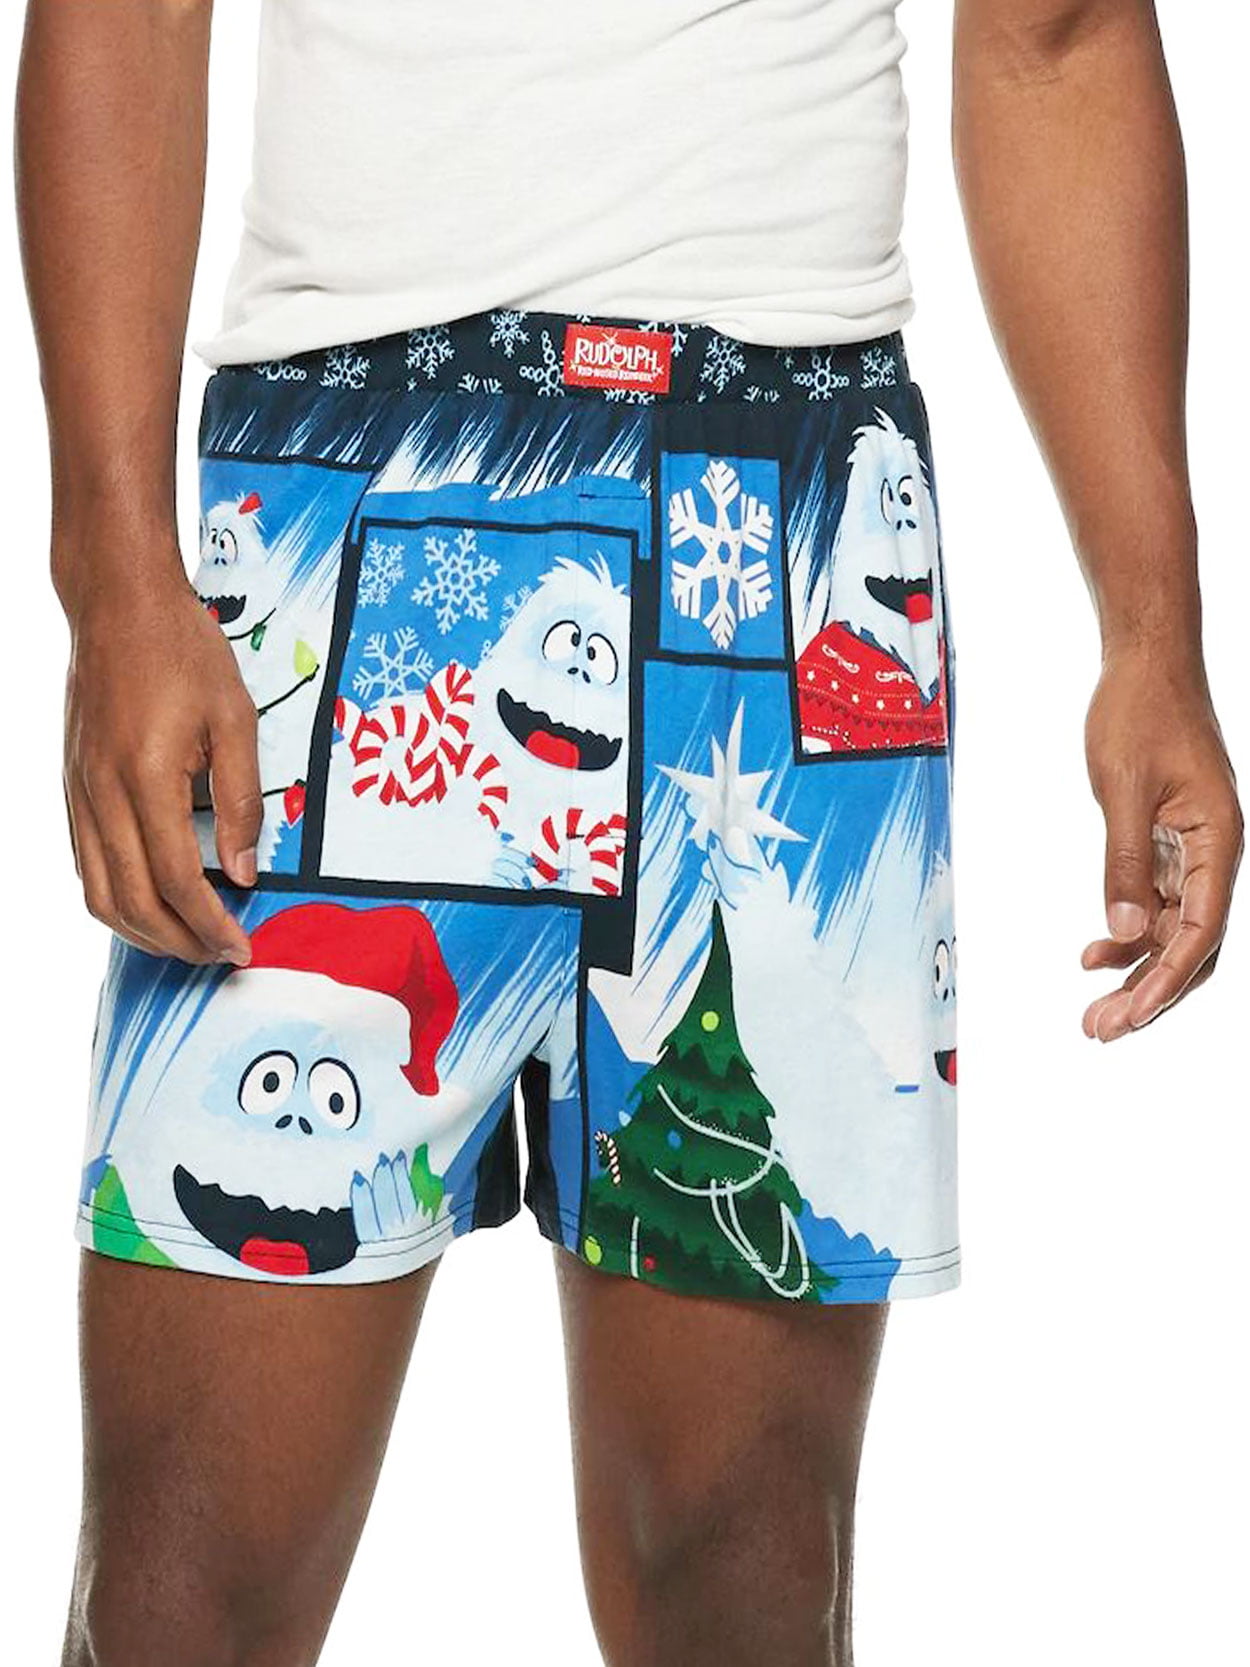 Men's Santa Hat & Boxers Shorts Gift Set Large 36-38 NWT $32 